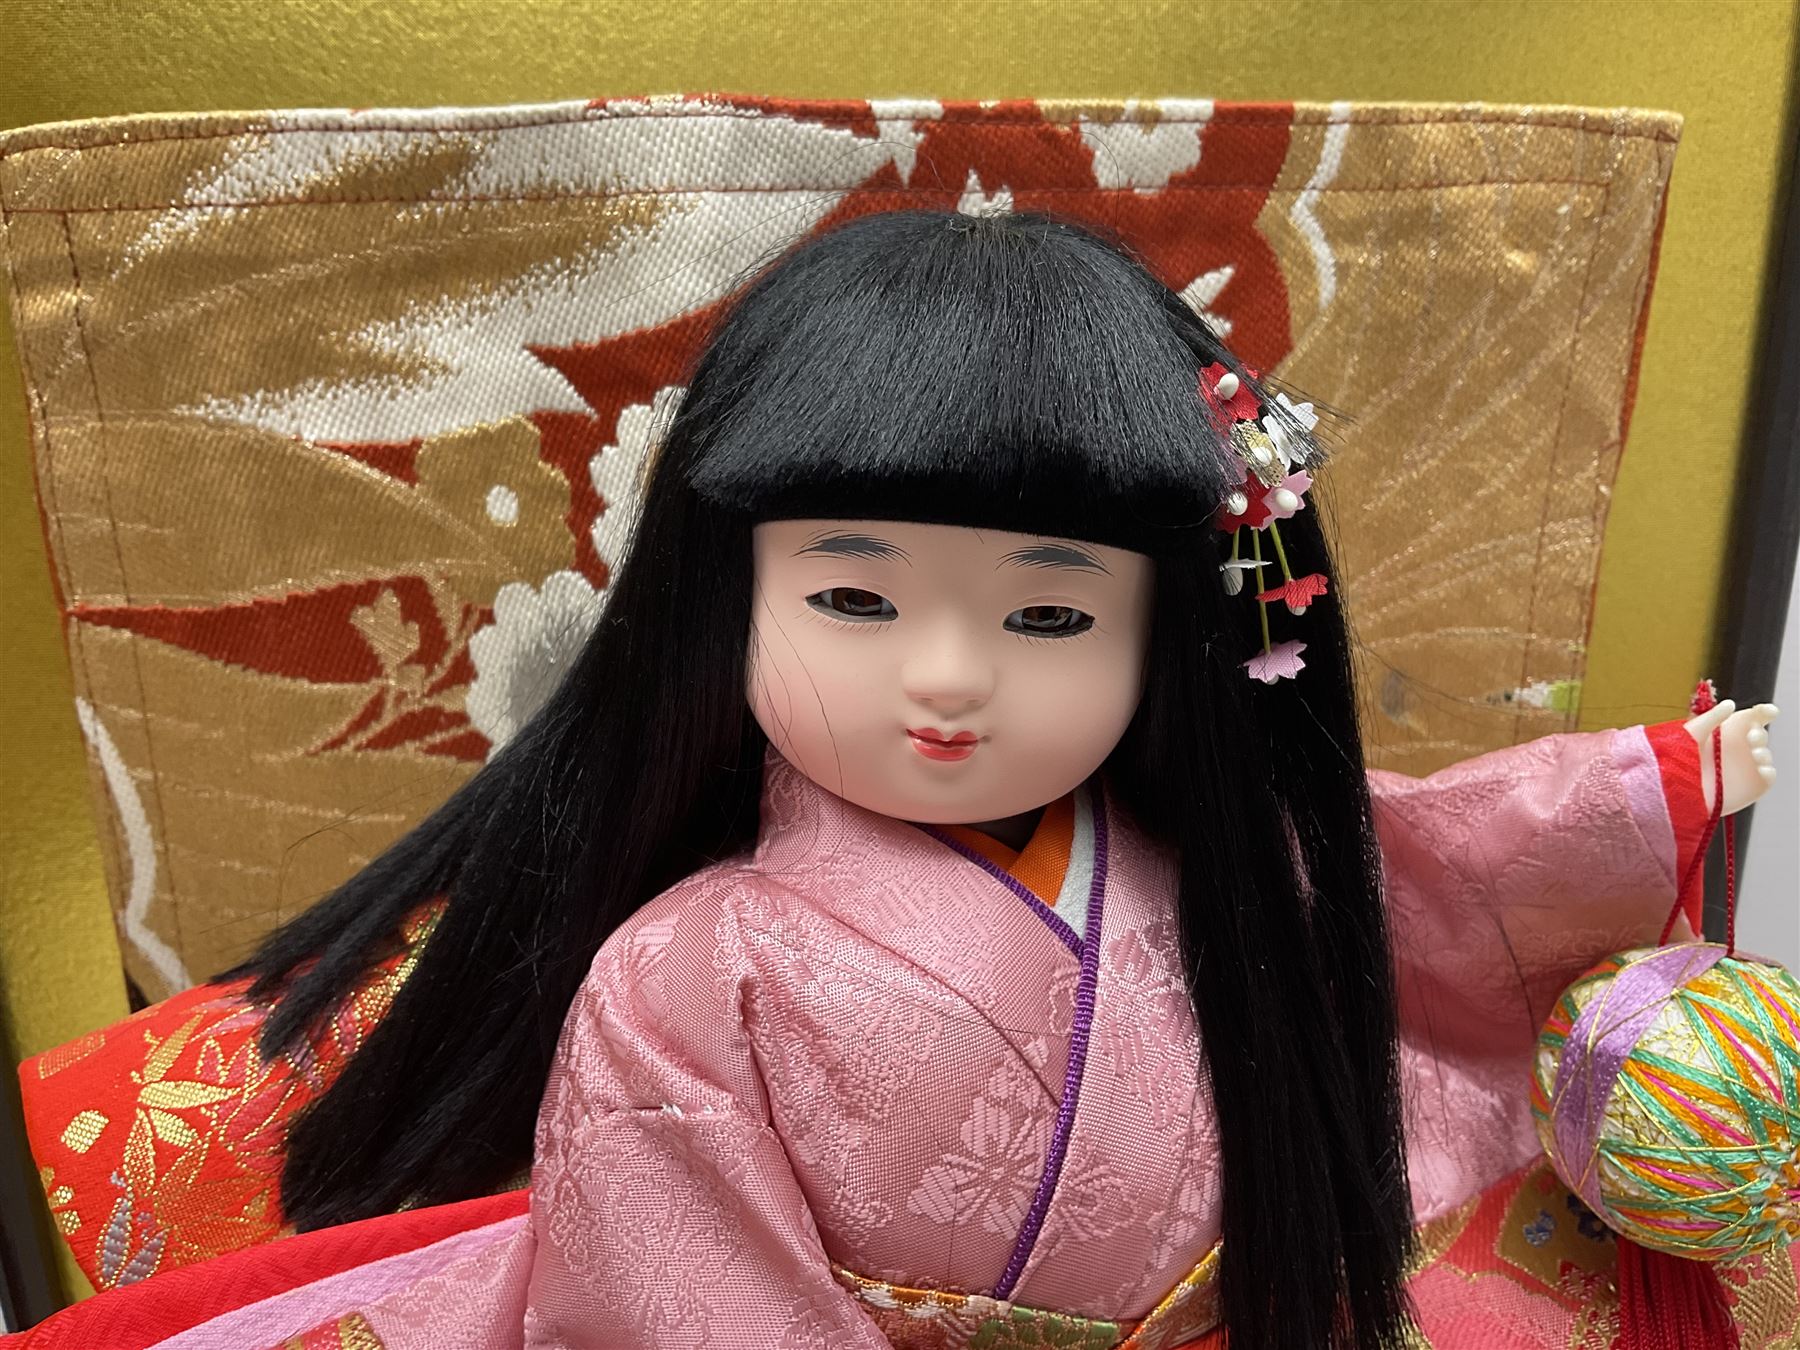 Japanese doll - Image 4 of 7